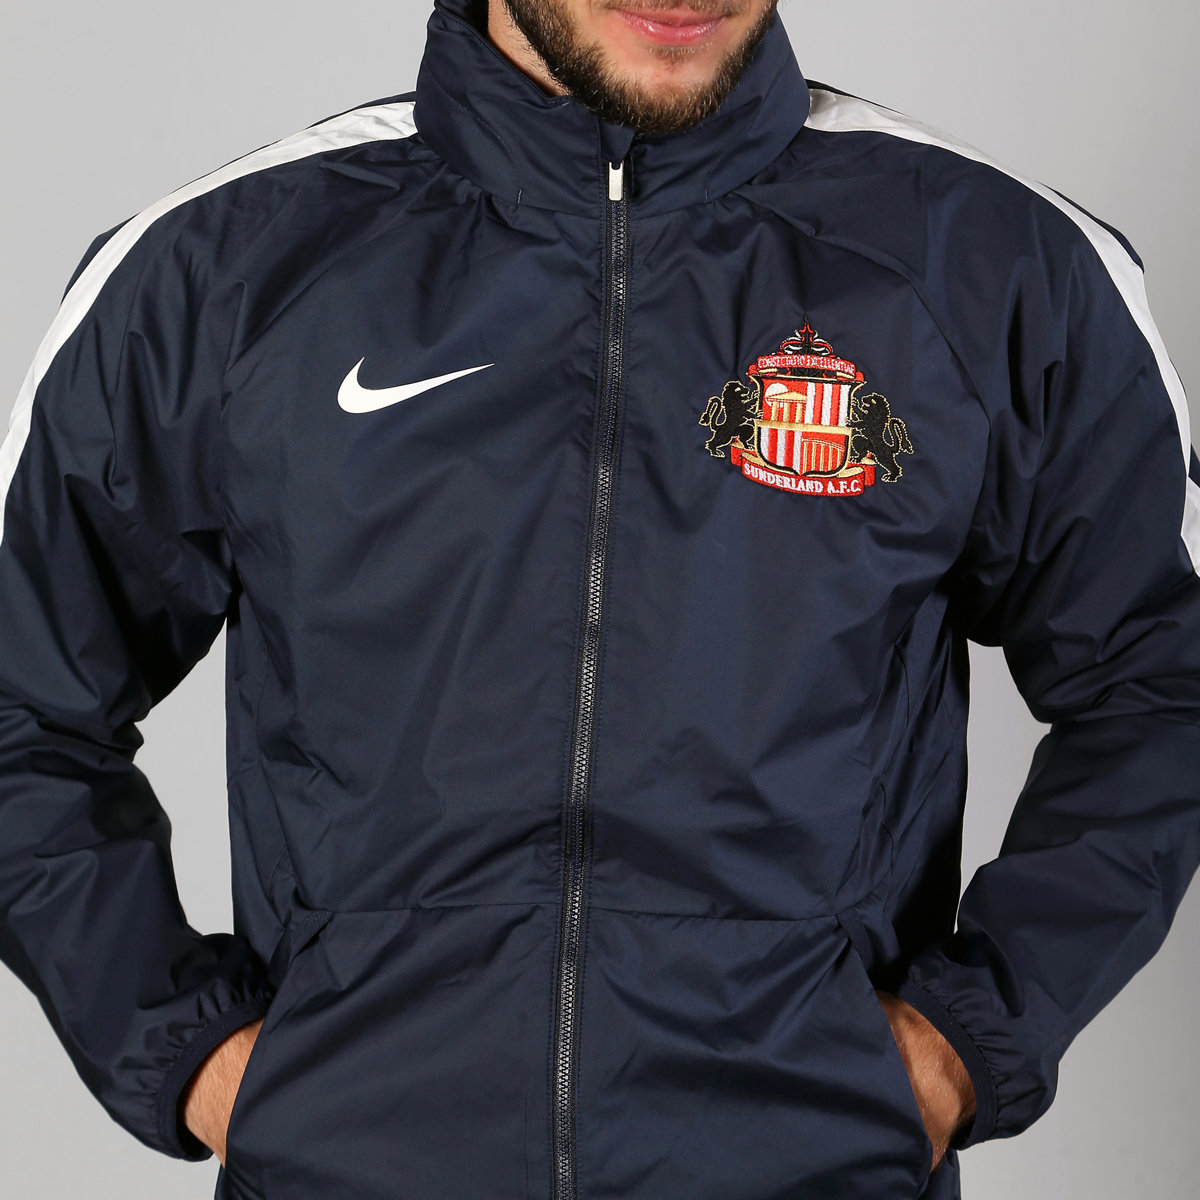 Buy the 21-22 Nike Rain Jacket online at Sunderland AFC Store